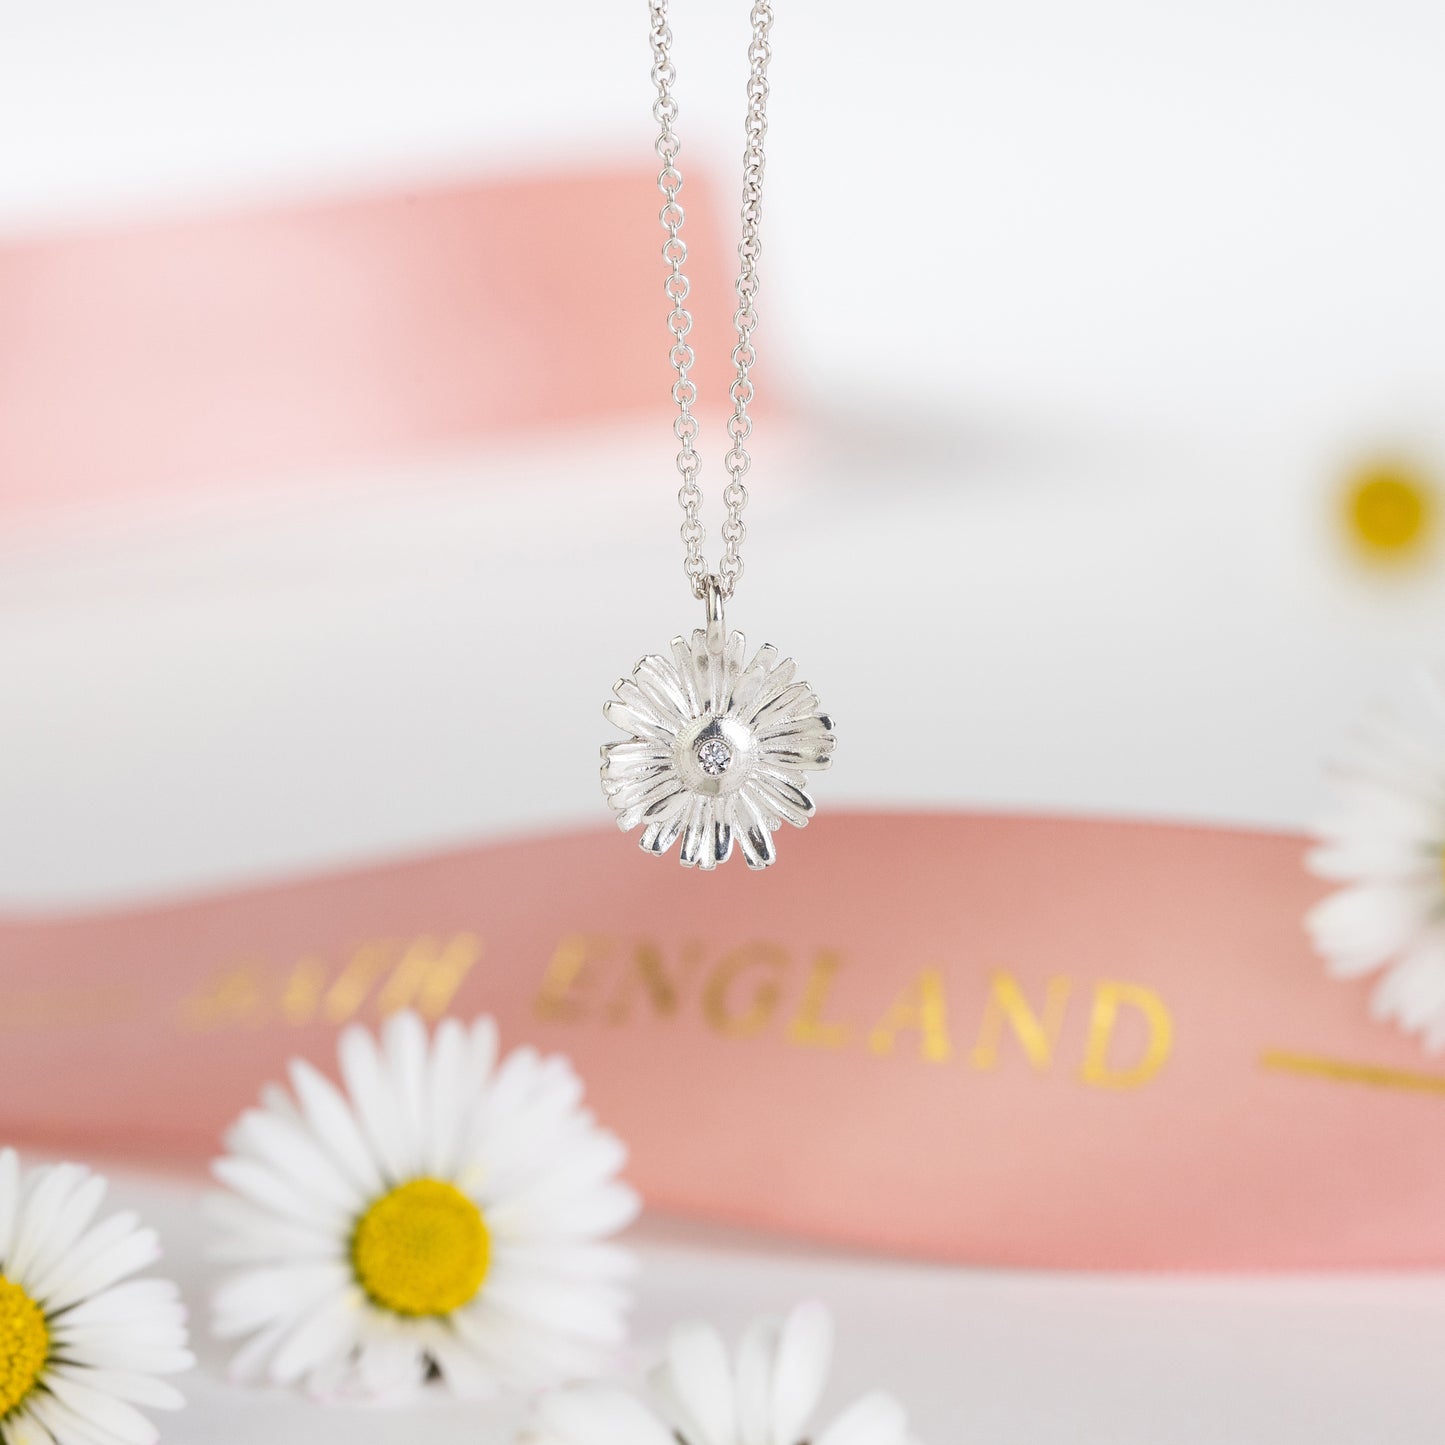 April Birth Flower & Birthstone Necklace - Daisy & Diamond - Silver